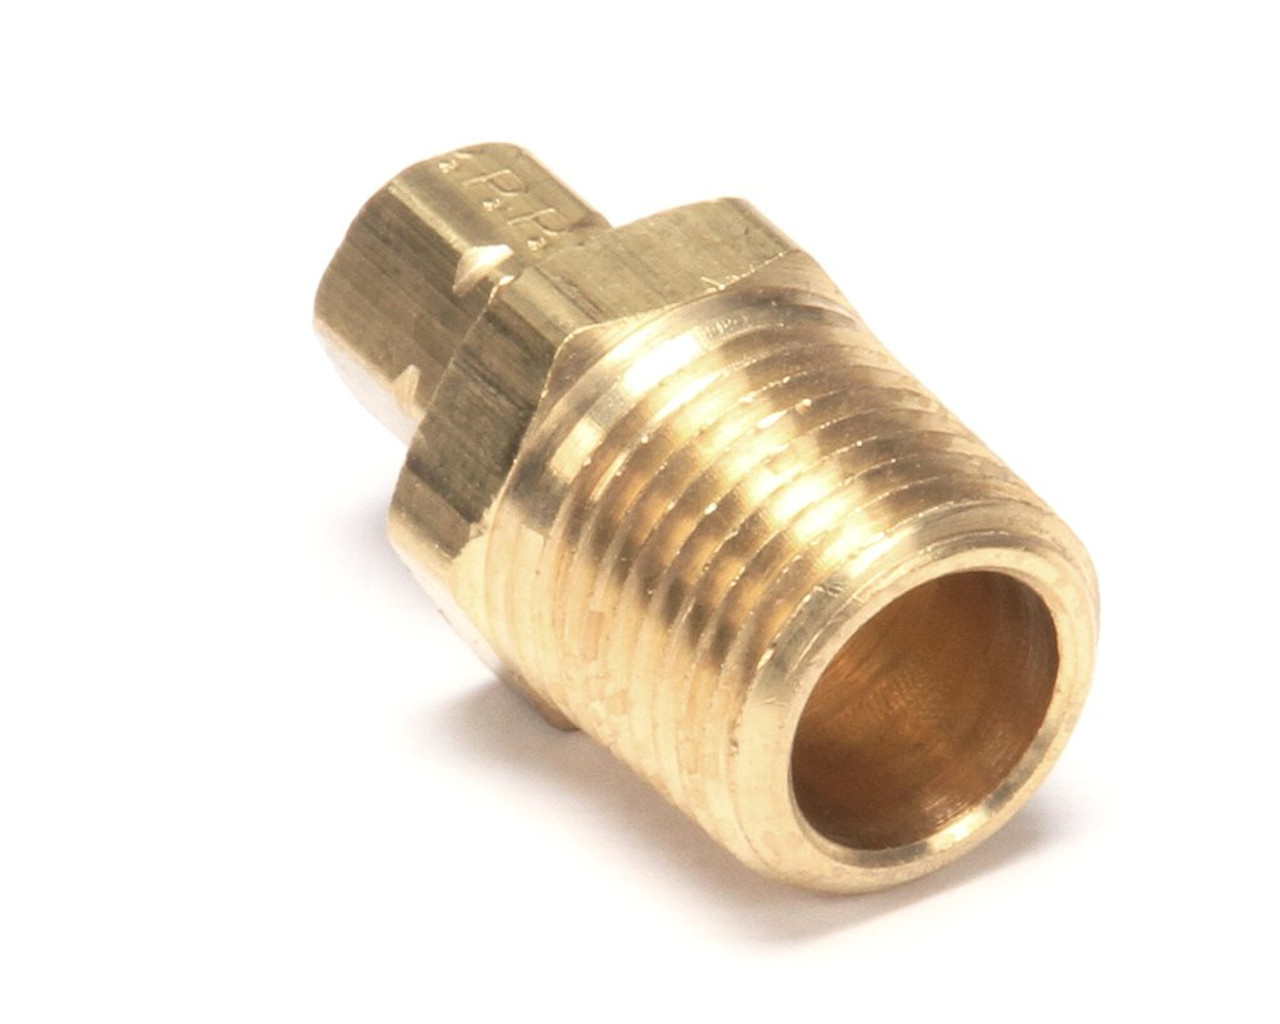 Cleveland Male Gauge Brass Fitting FI05049